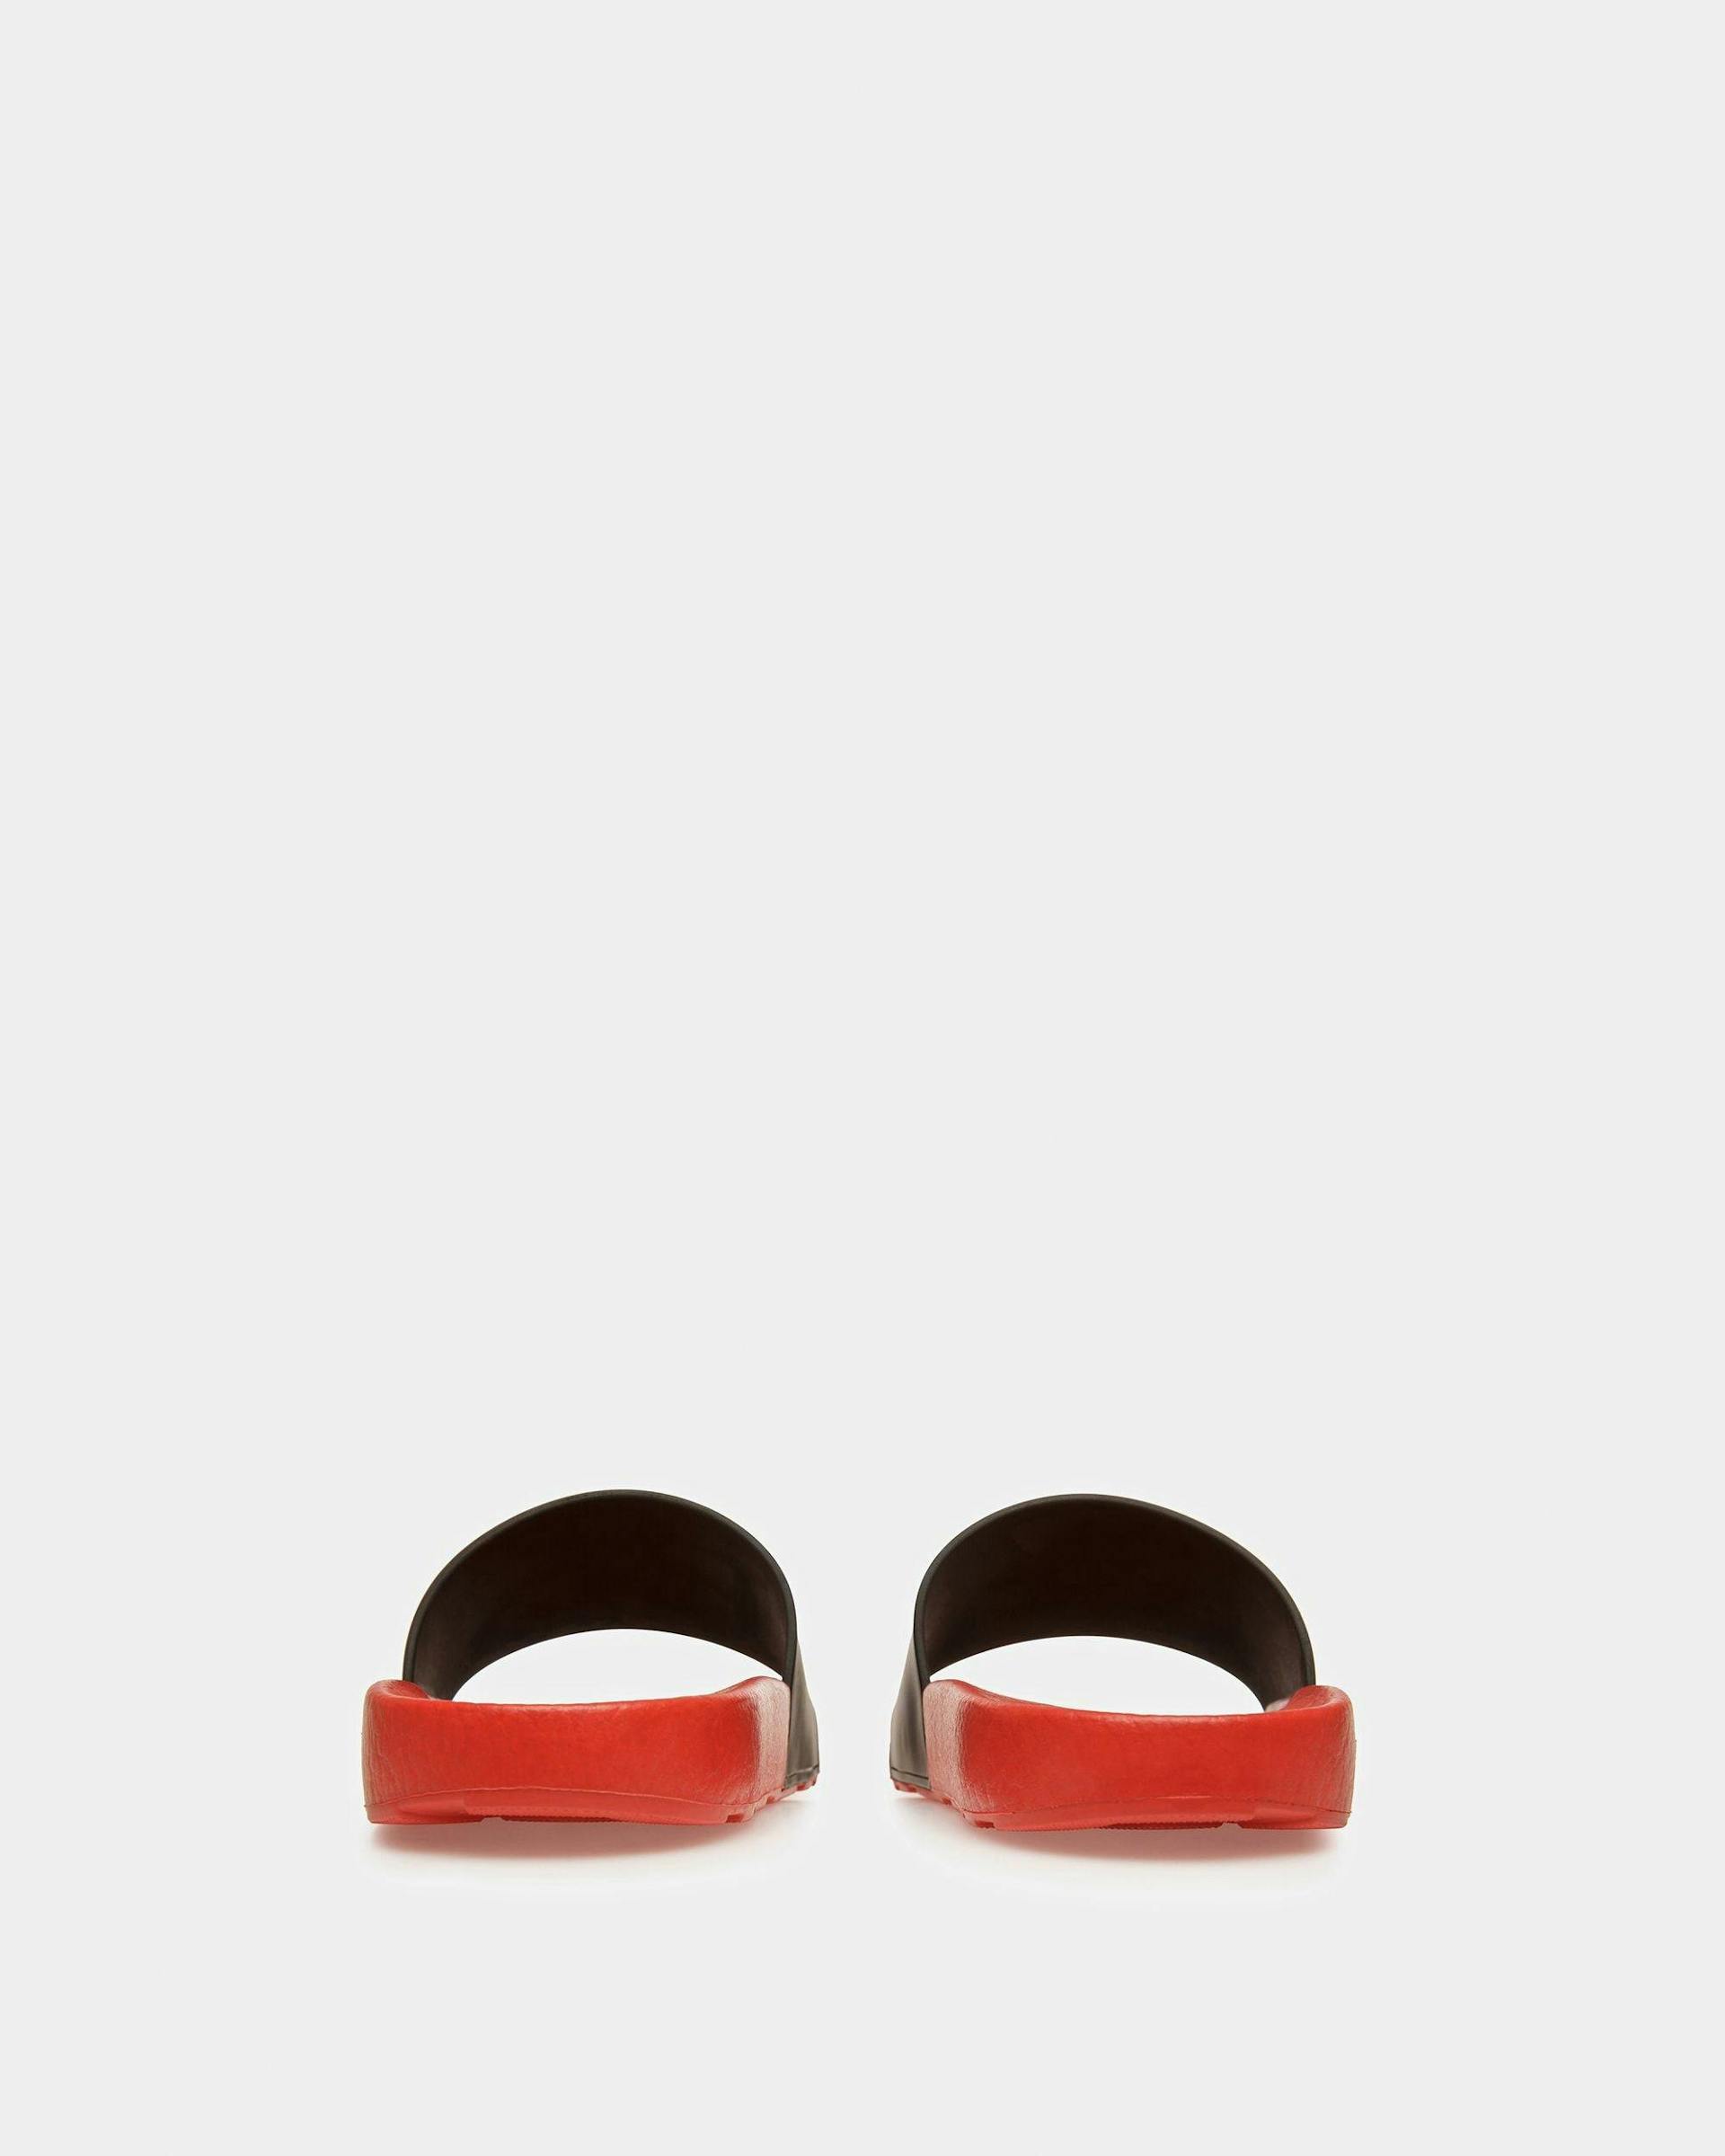 Scotty Rubber Sandals In Black And Orange - Men's - Bally - 04